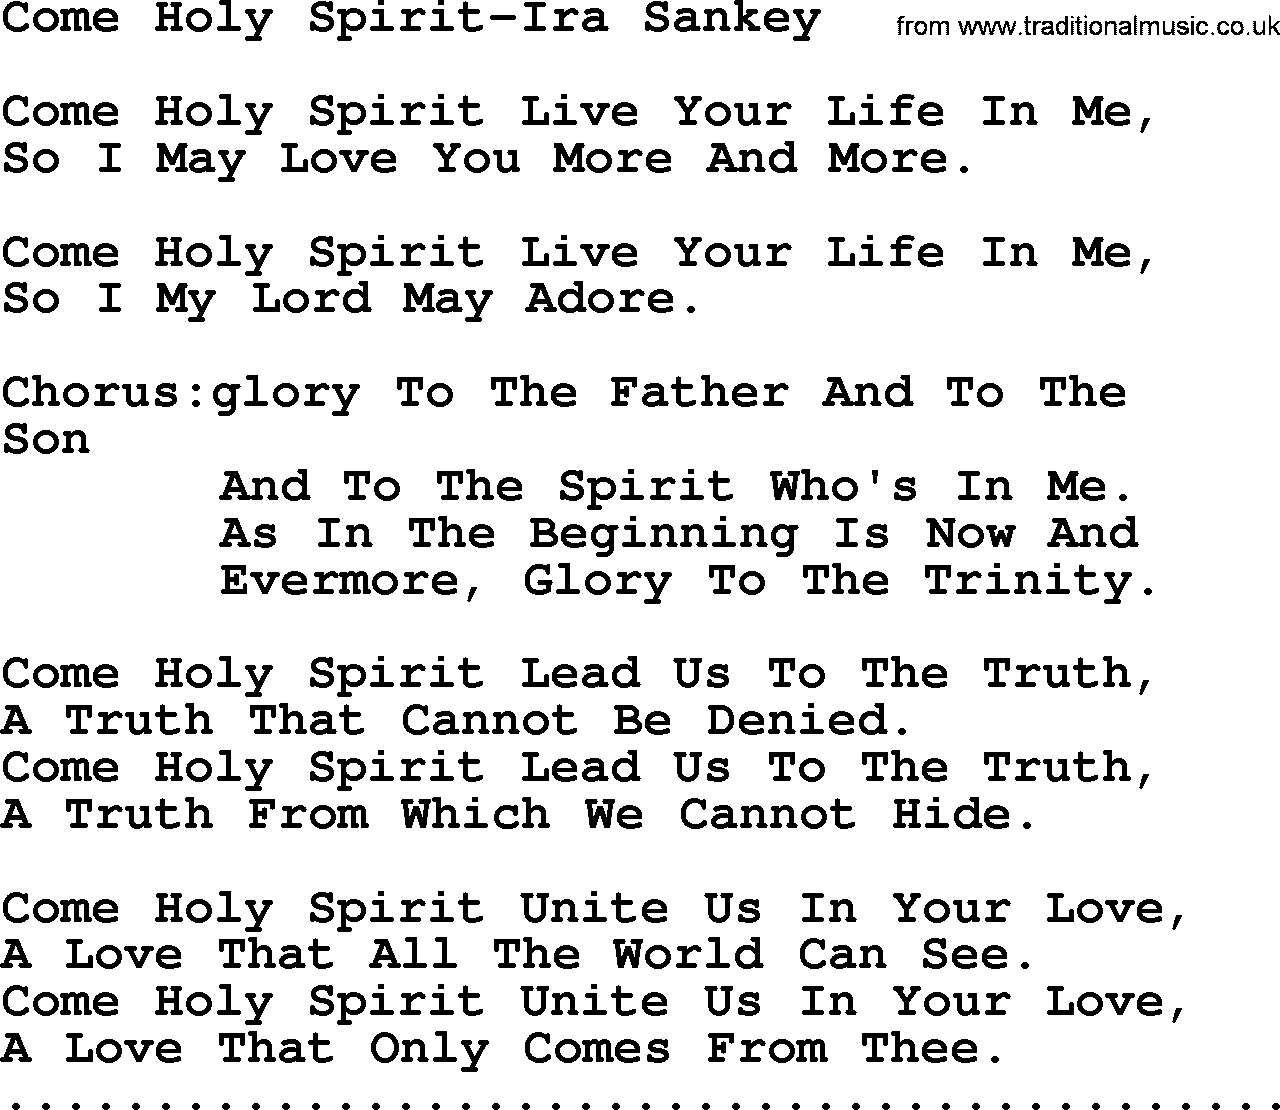 Ira Sankey hymn: Come Holy Spirit-Ira Sankey, lyrics